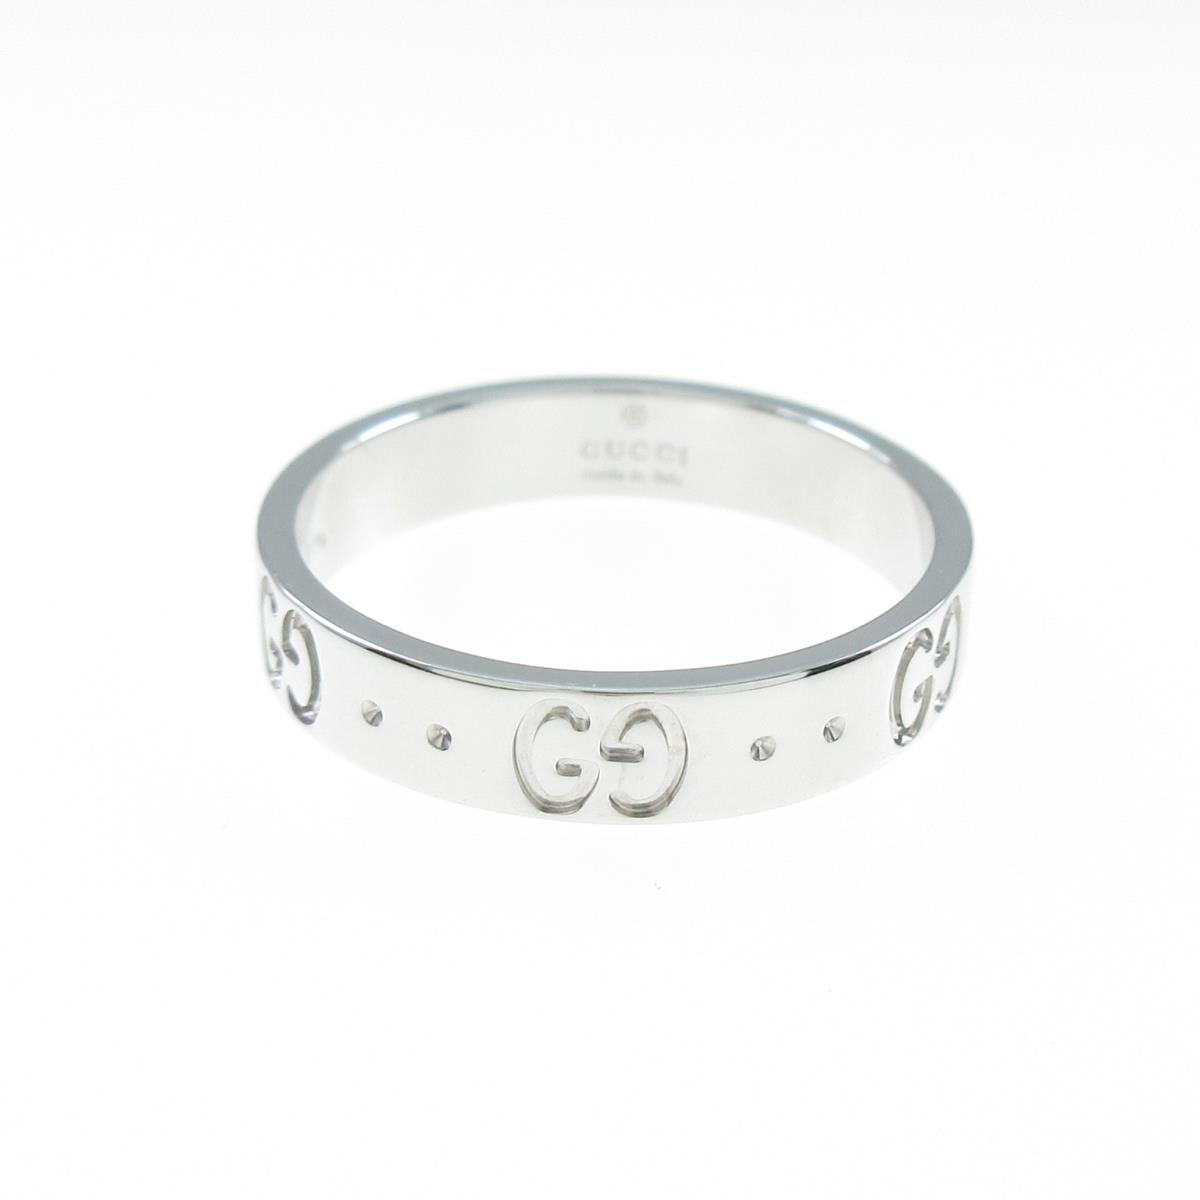 Authentic Gucci Icon ring #260-003-658-1030 | eBay